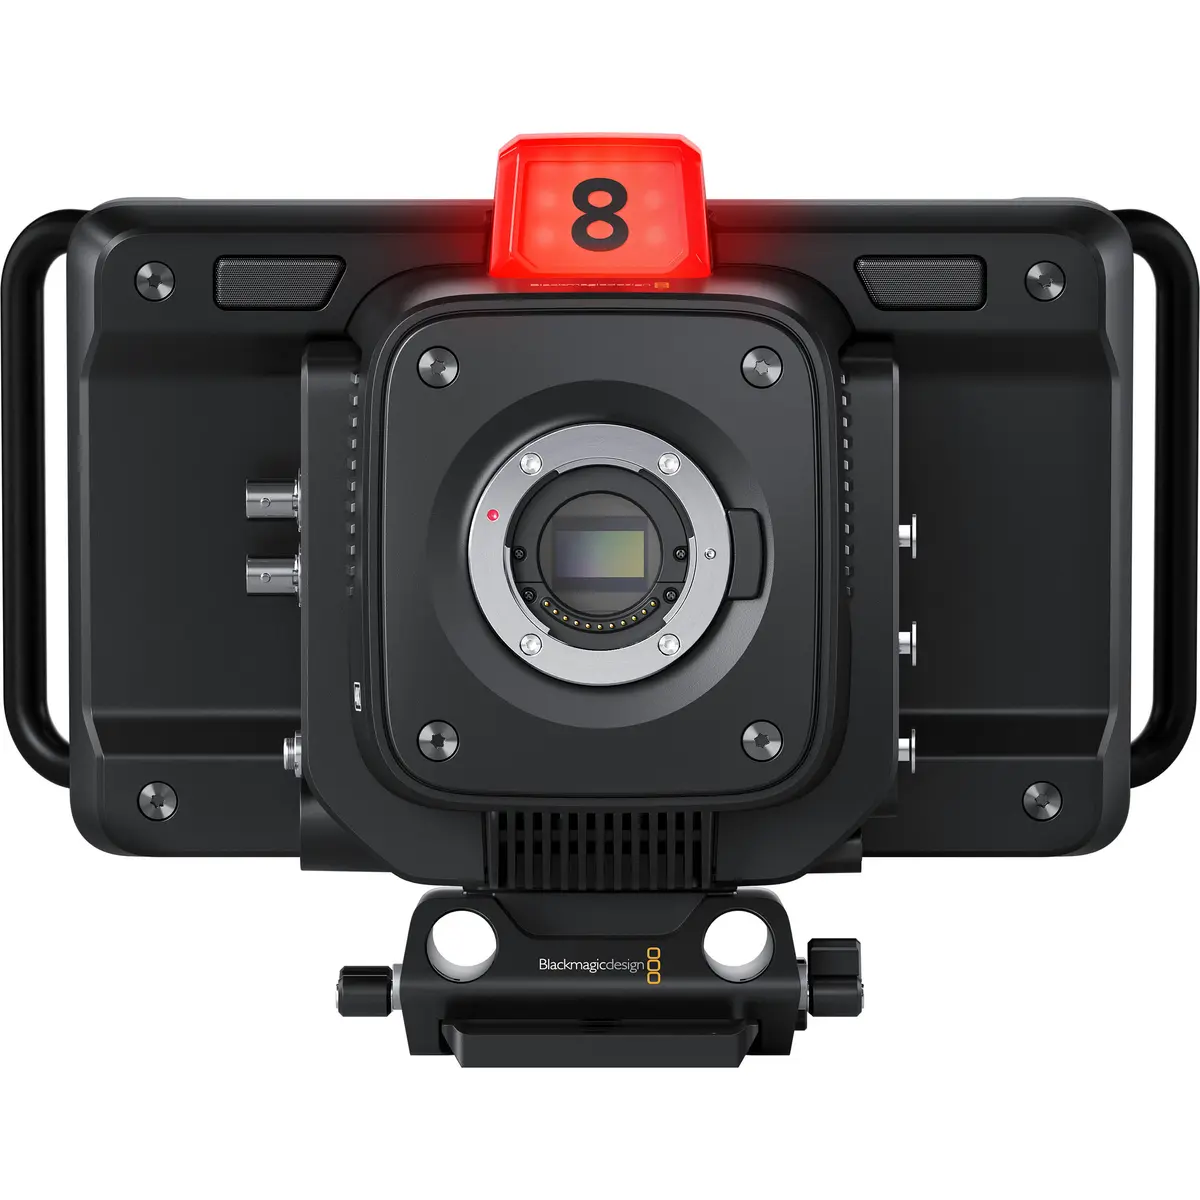 1. Blackmagic Design Studio Camera 4K Pro